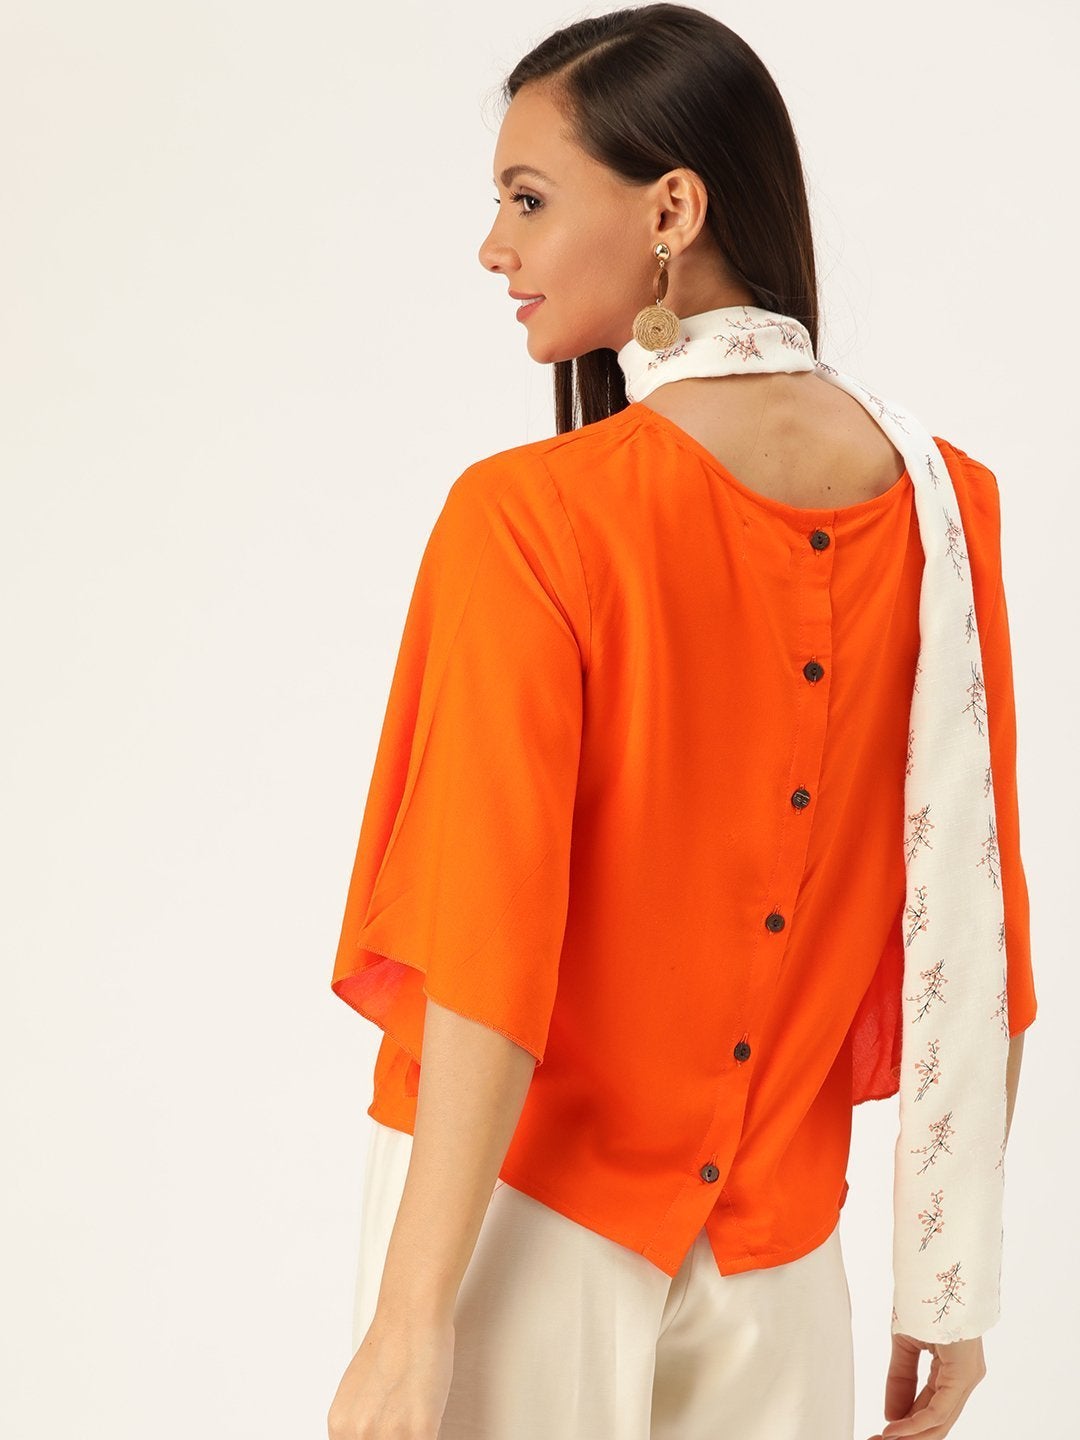 Women's Orange Top With  White Stole - InWeave